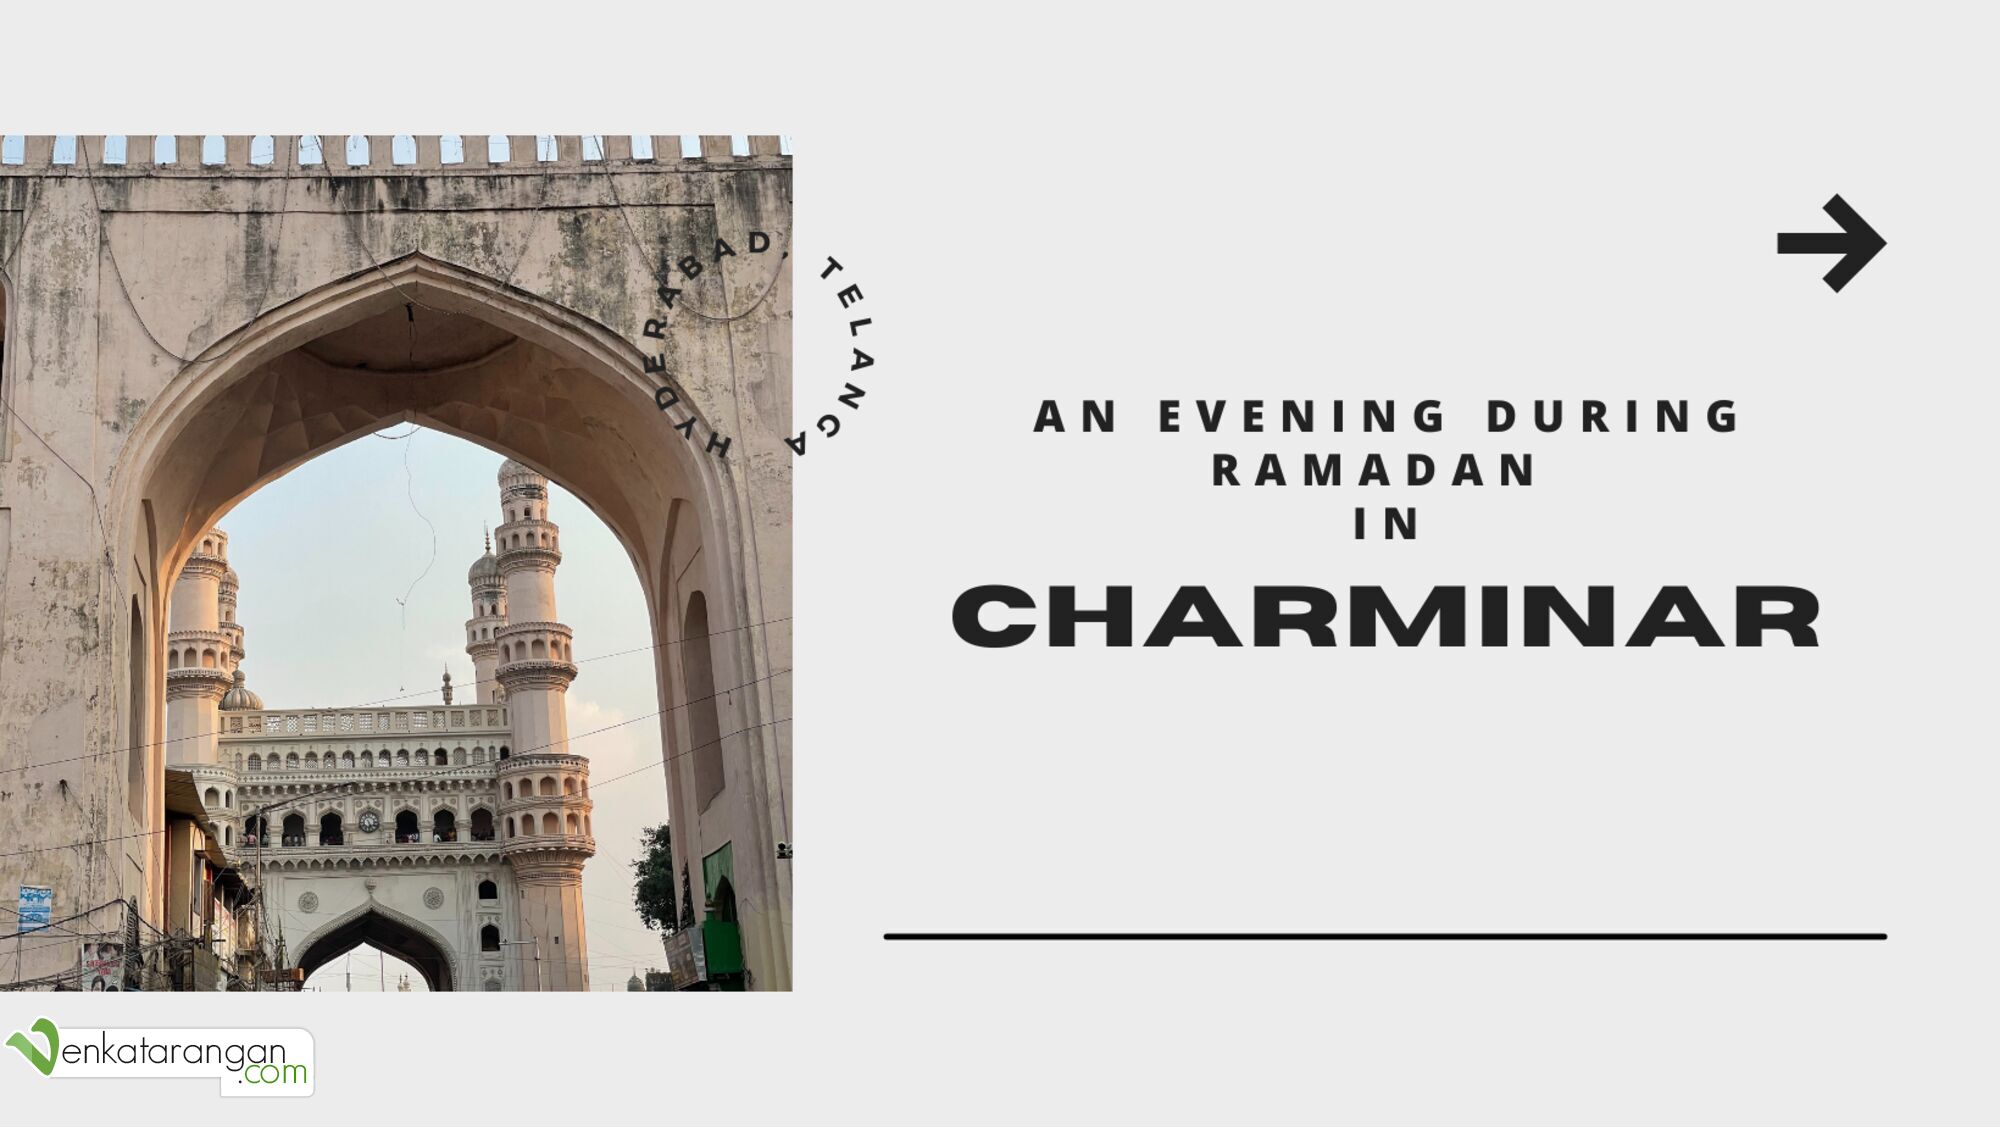 An evening during the Ramadan in Charminar